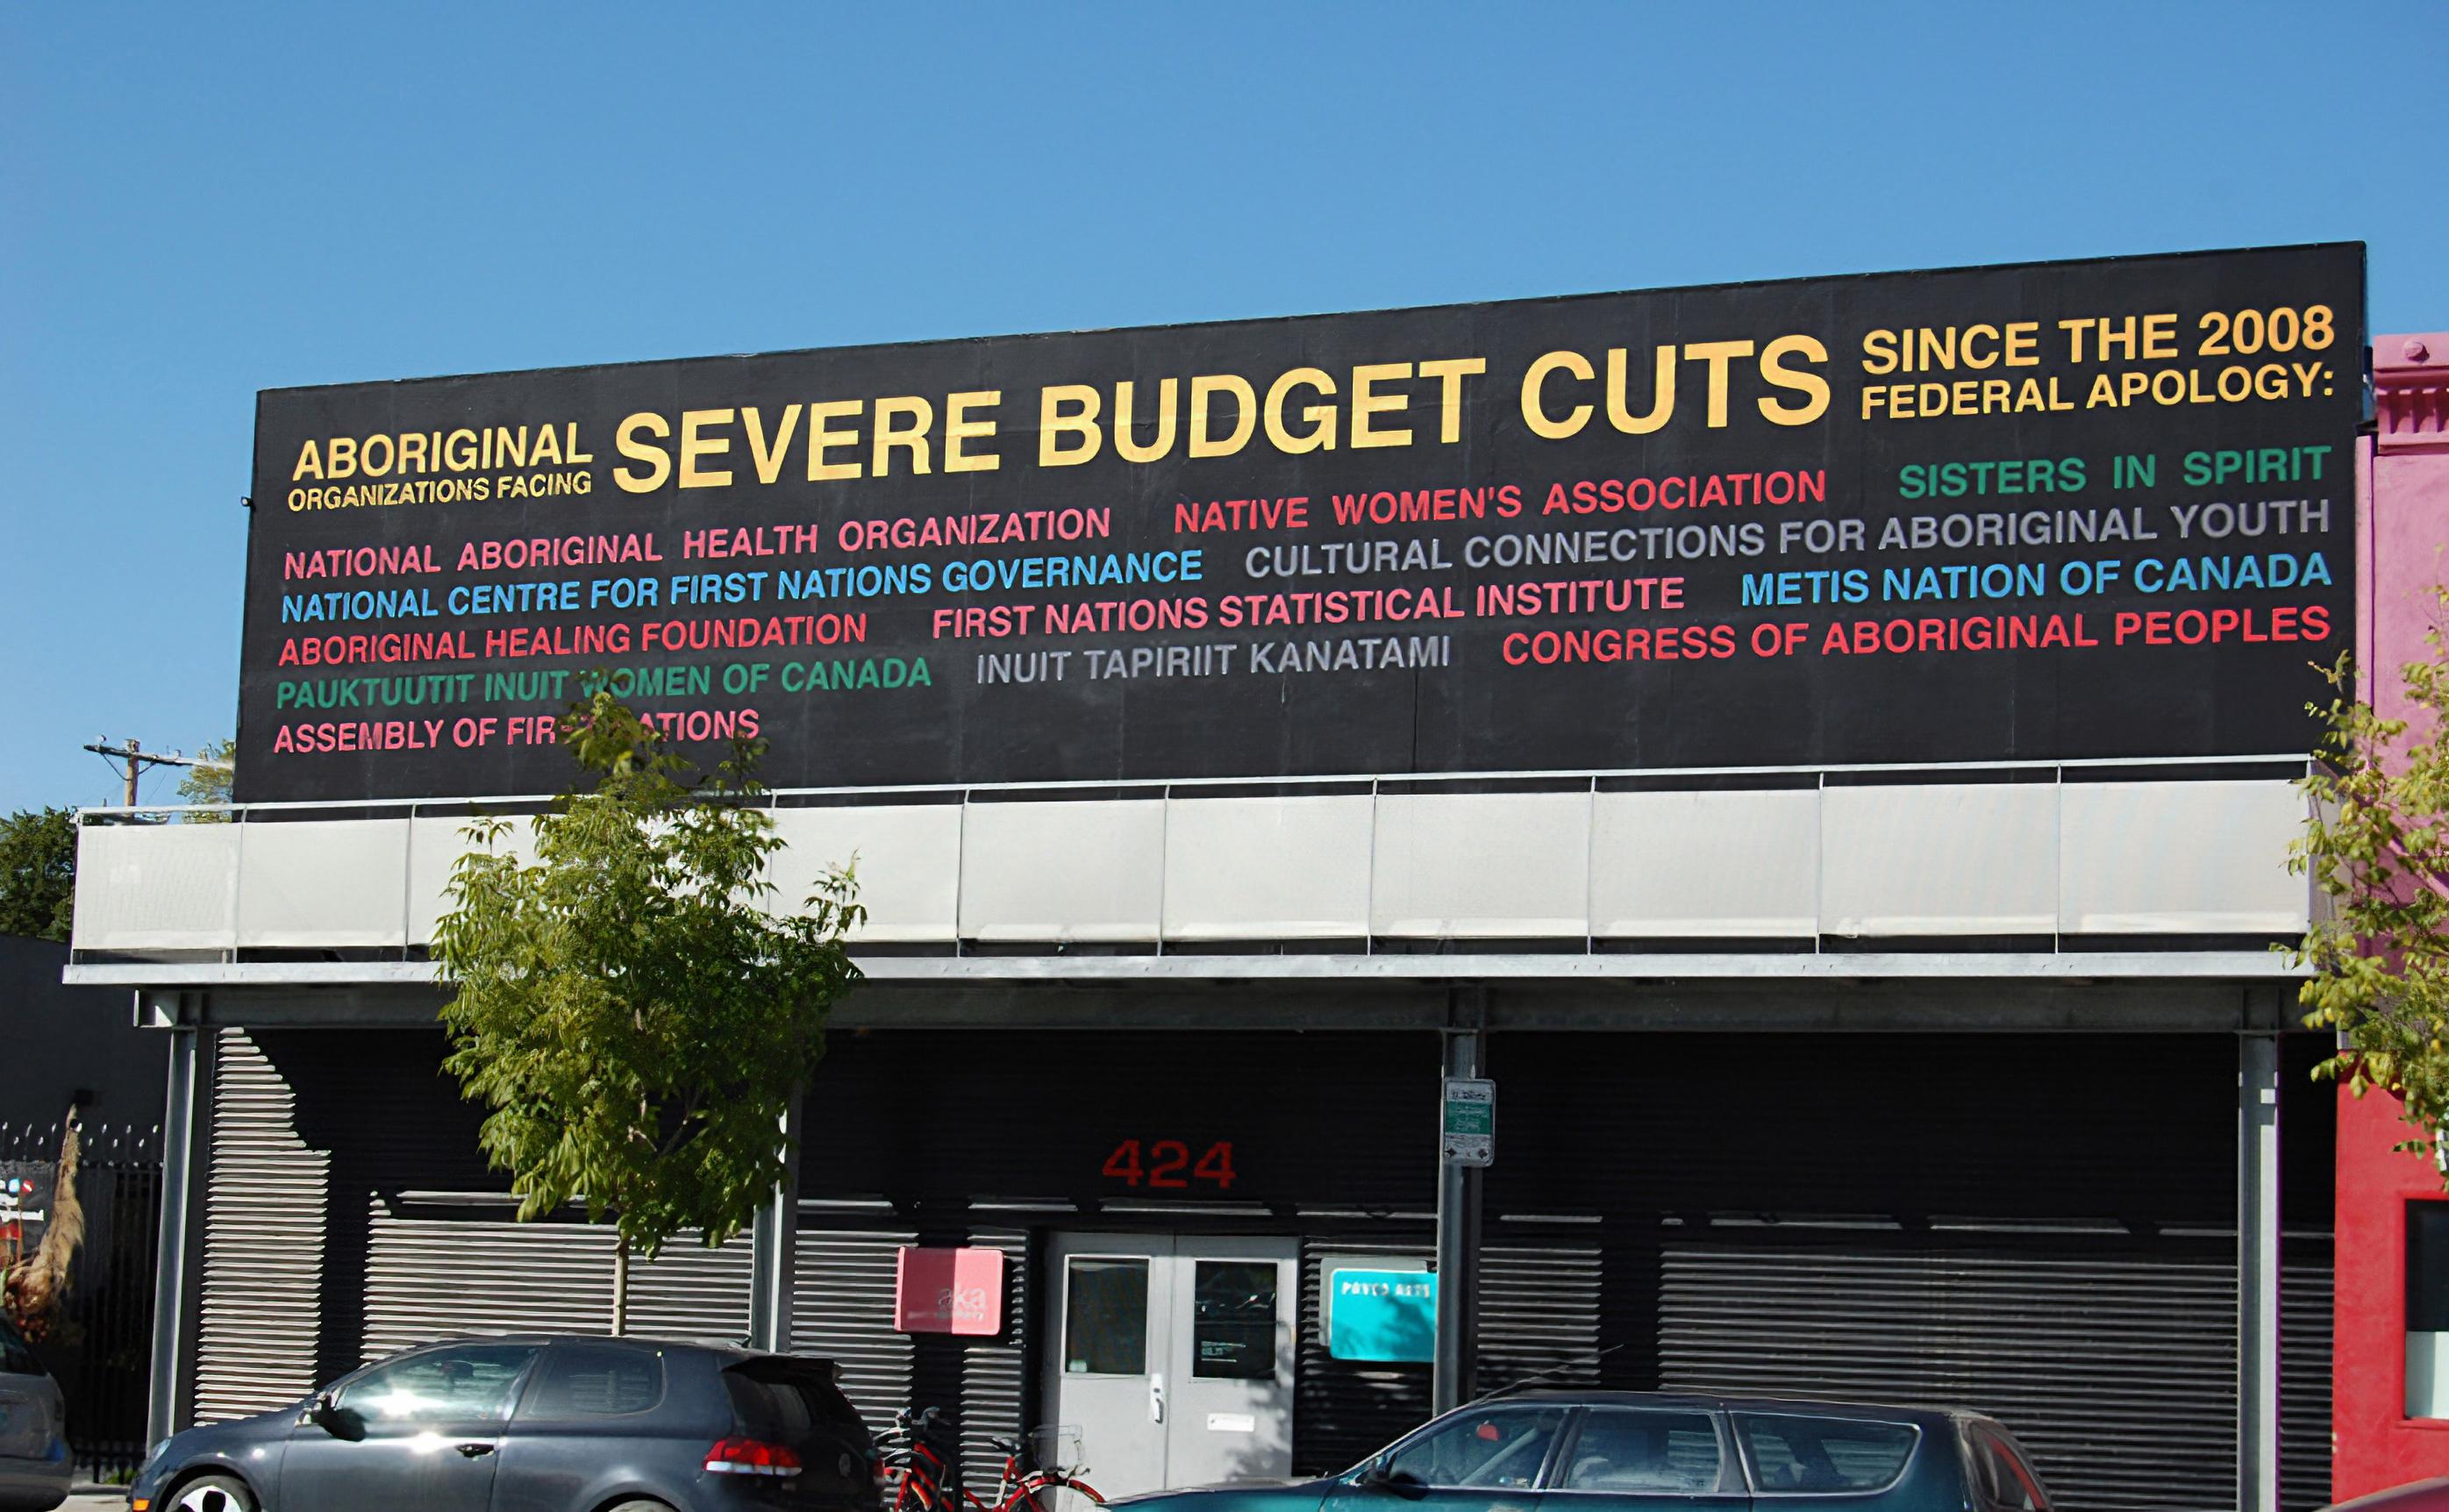 Budget Cuts, billboard, AKA Gallery and Paved Arts, Saskatoon, Saskatchewan, 2012